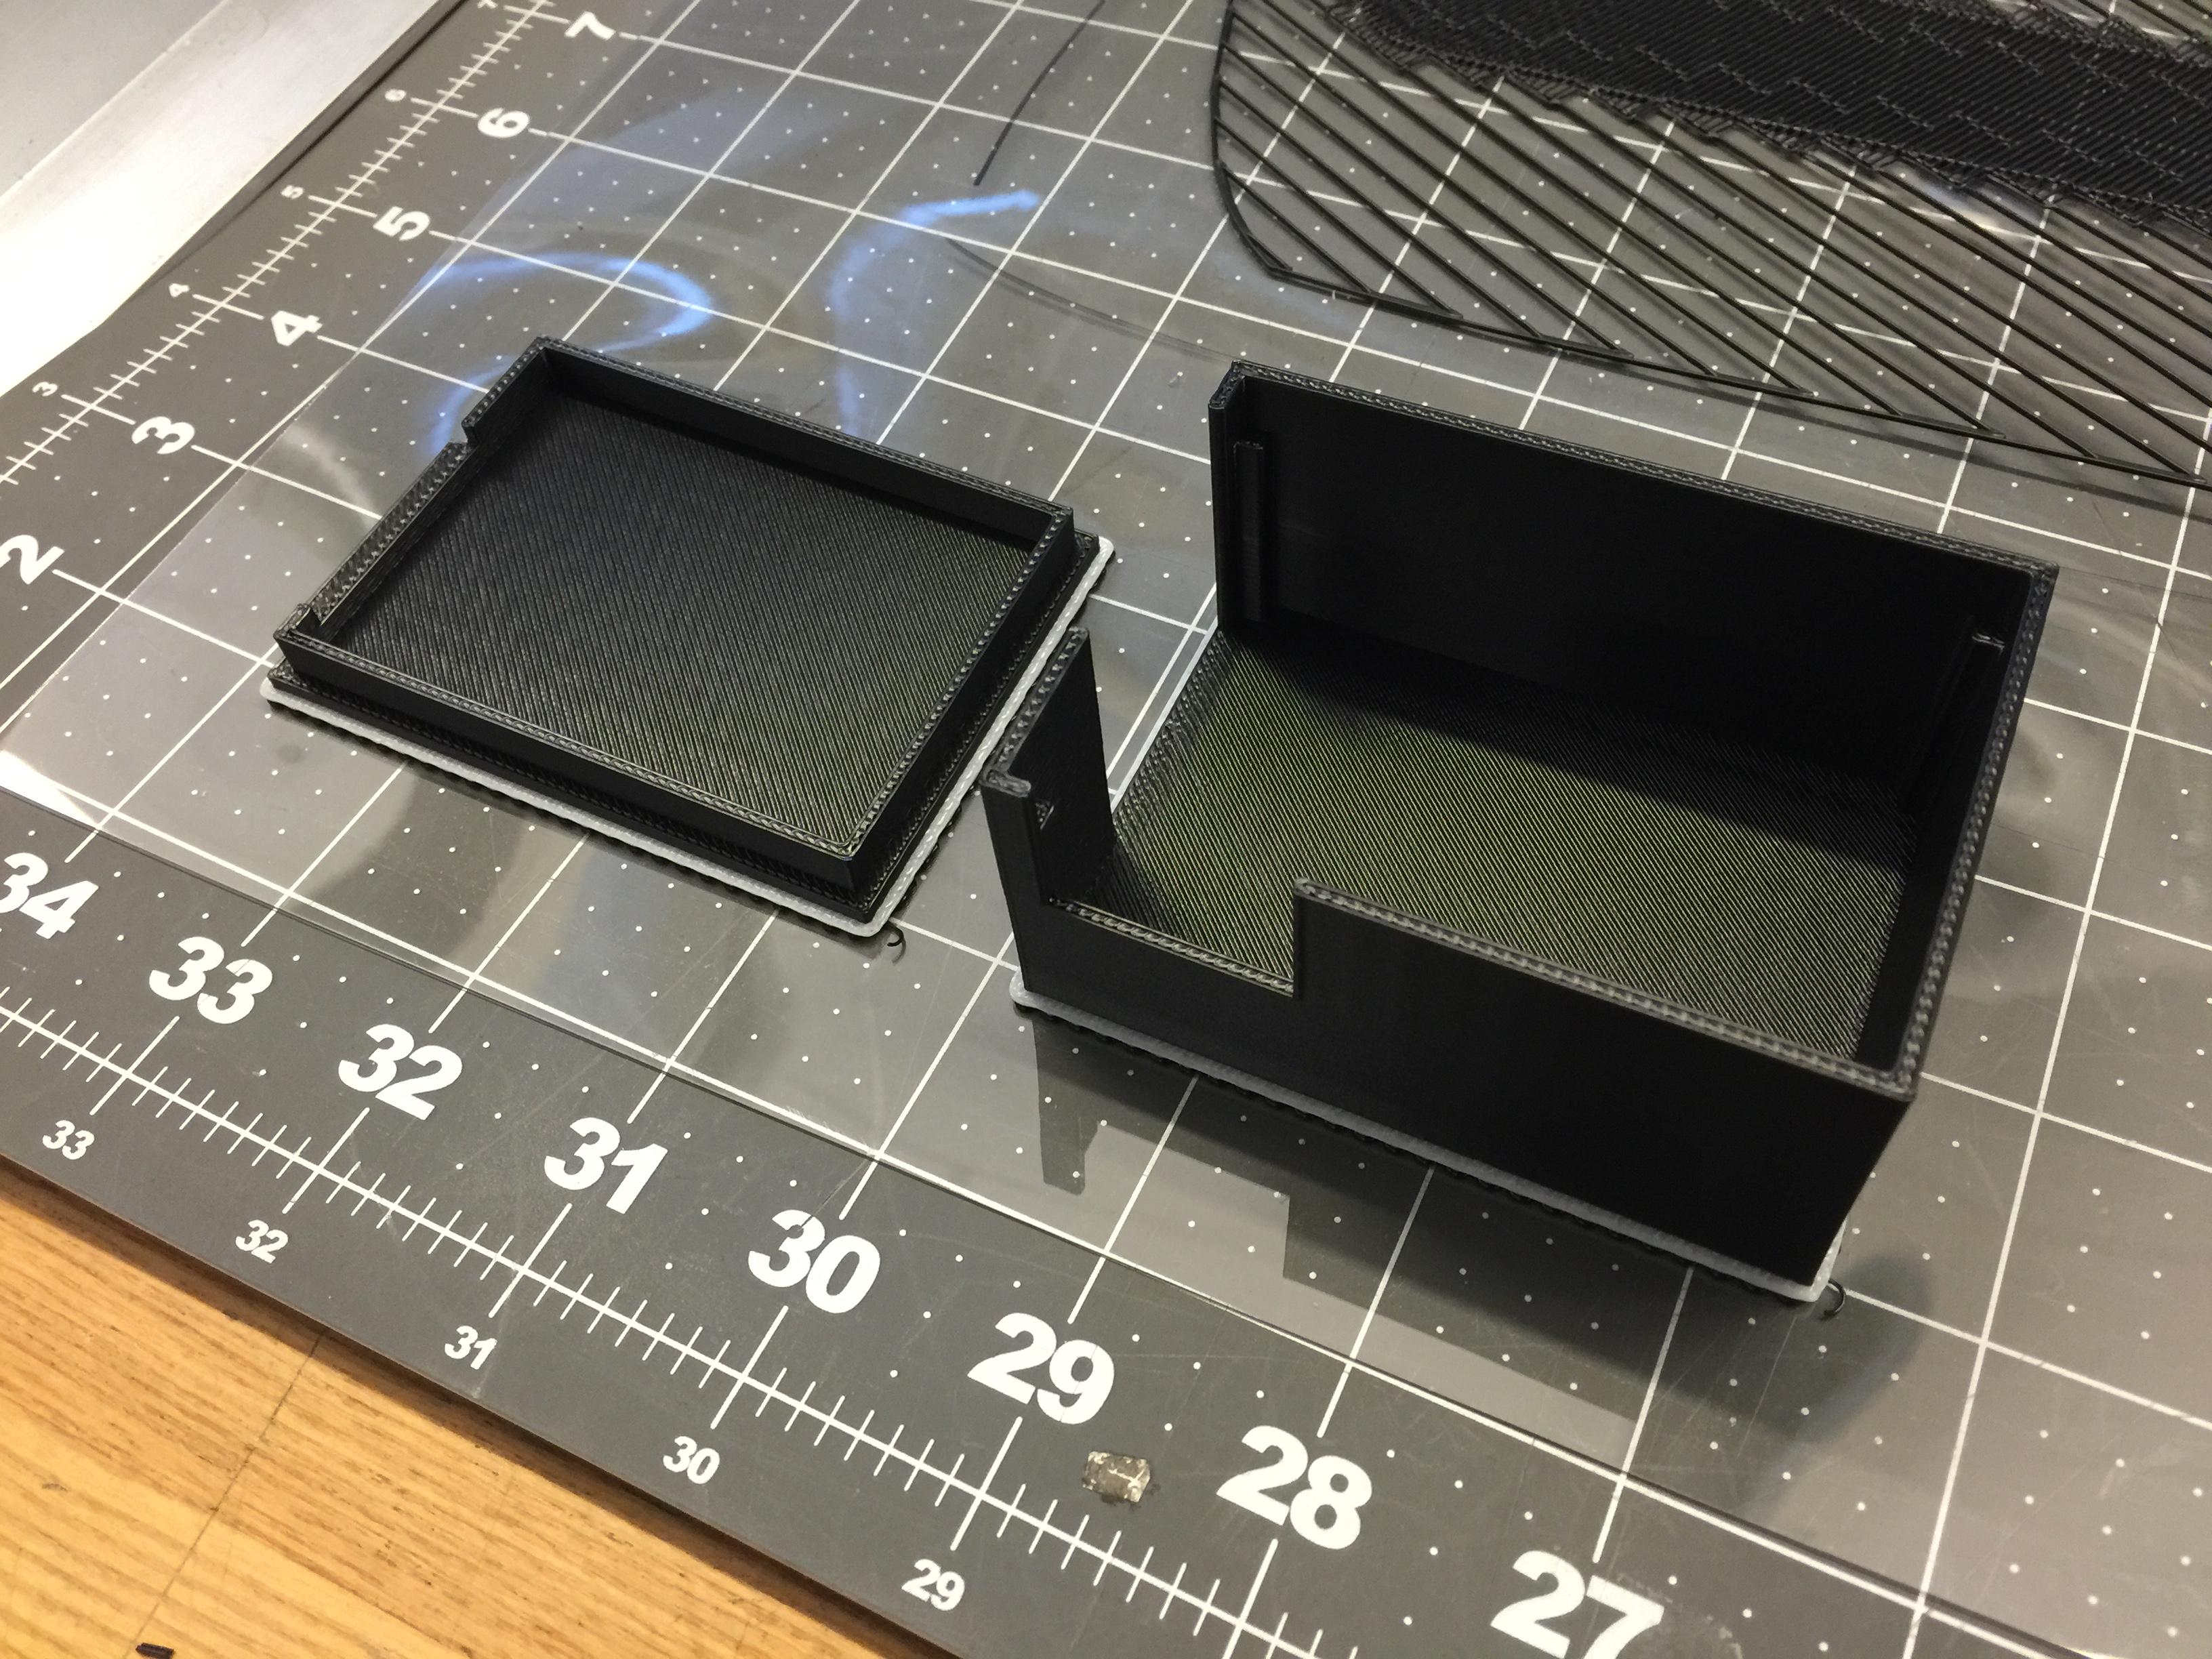 3D Printed Prototype Case